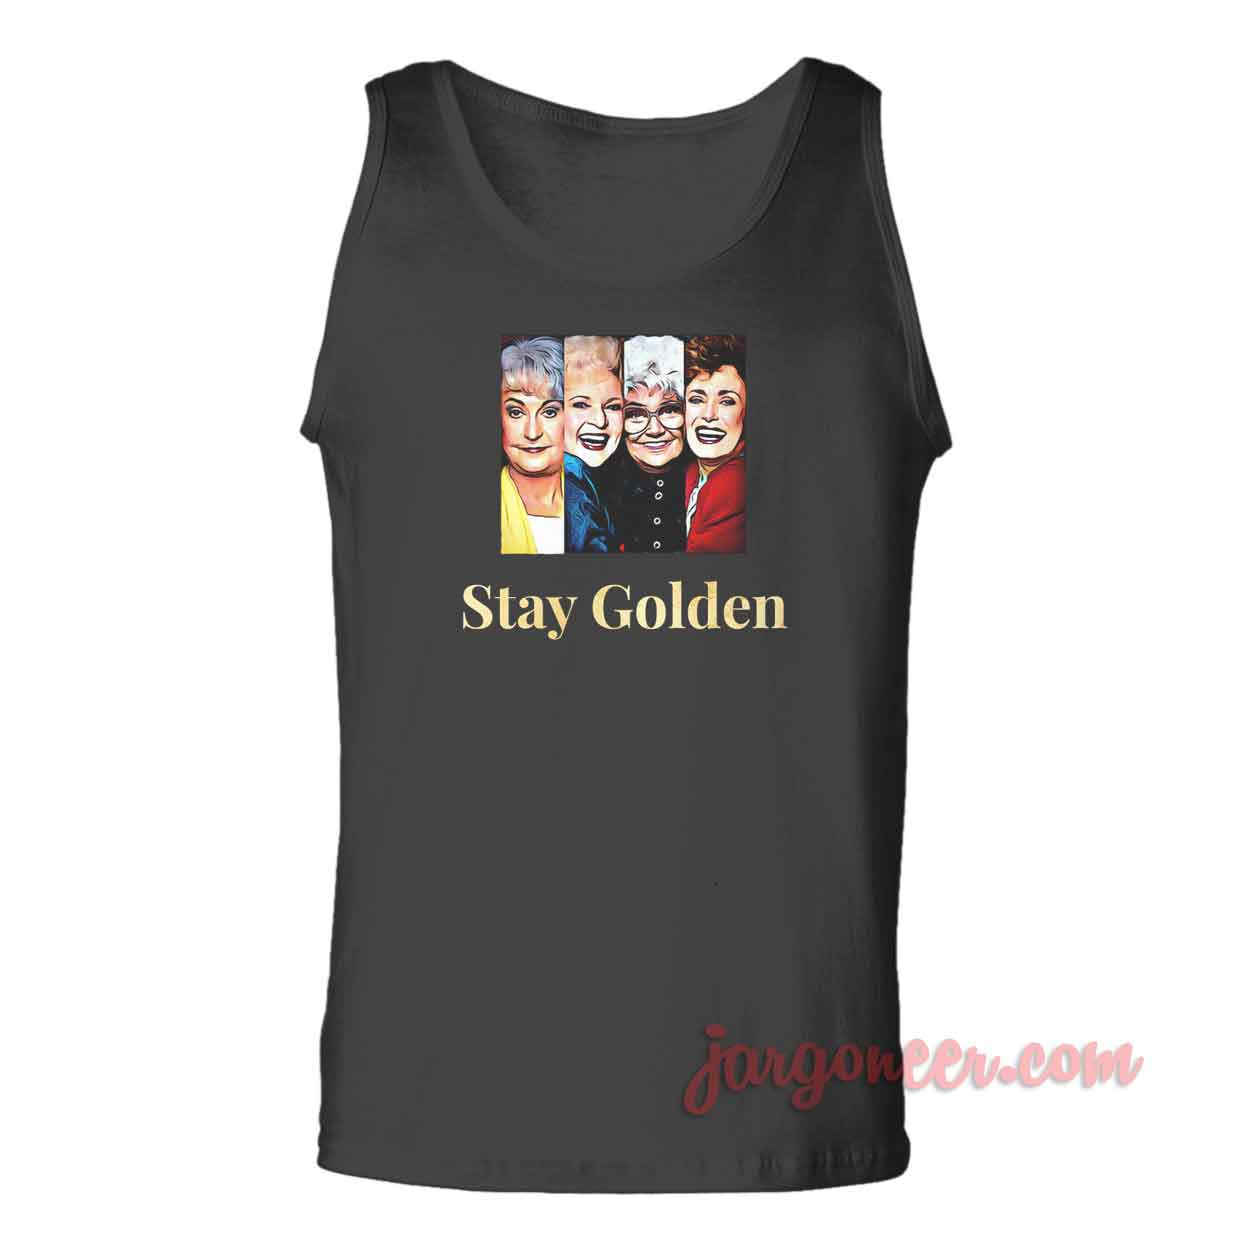 Stay Golden Movie - Shop Unique Graphic Cool Shirt Designs